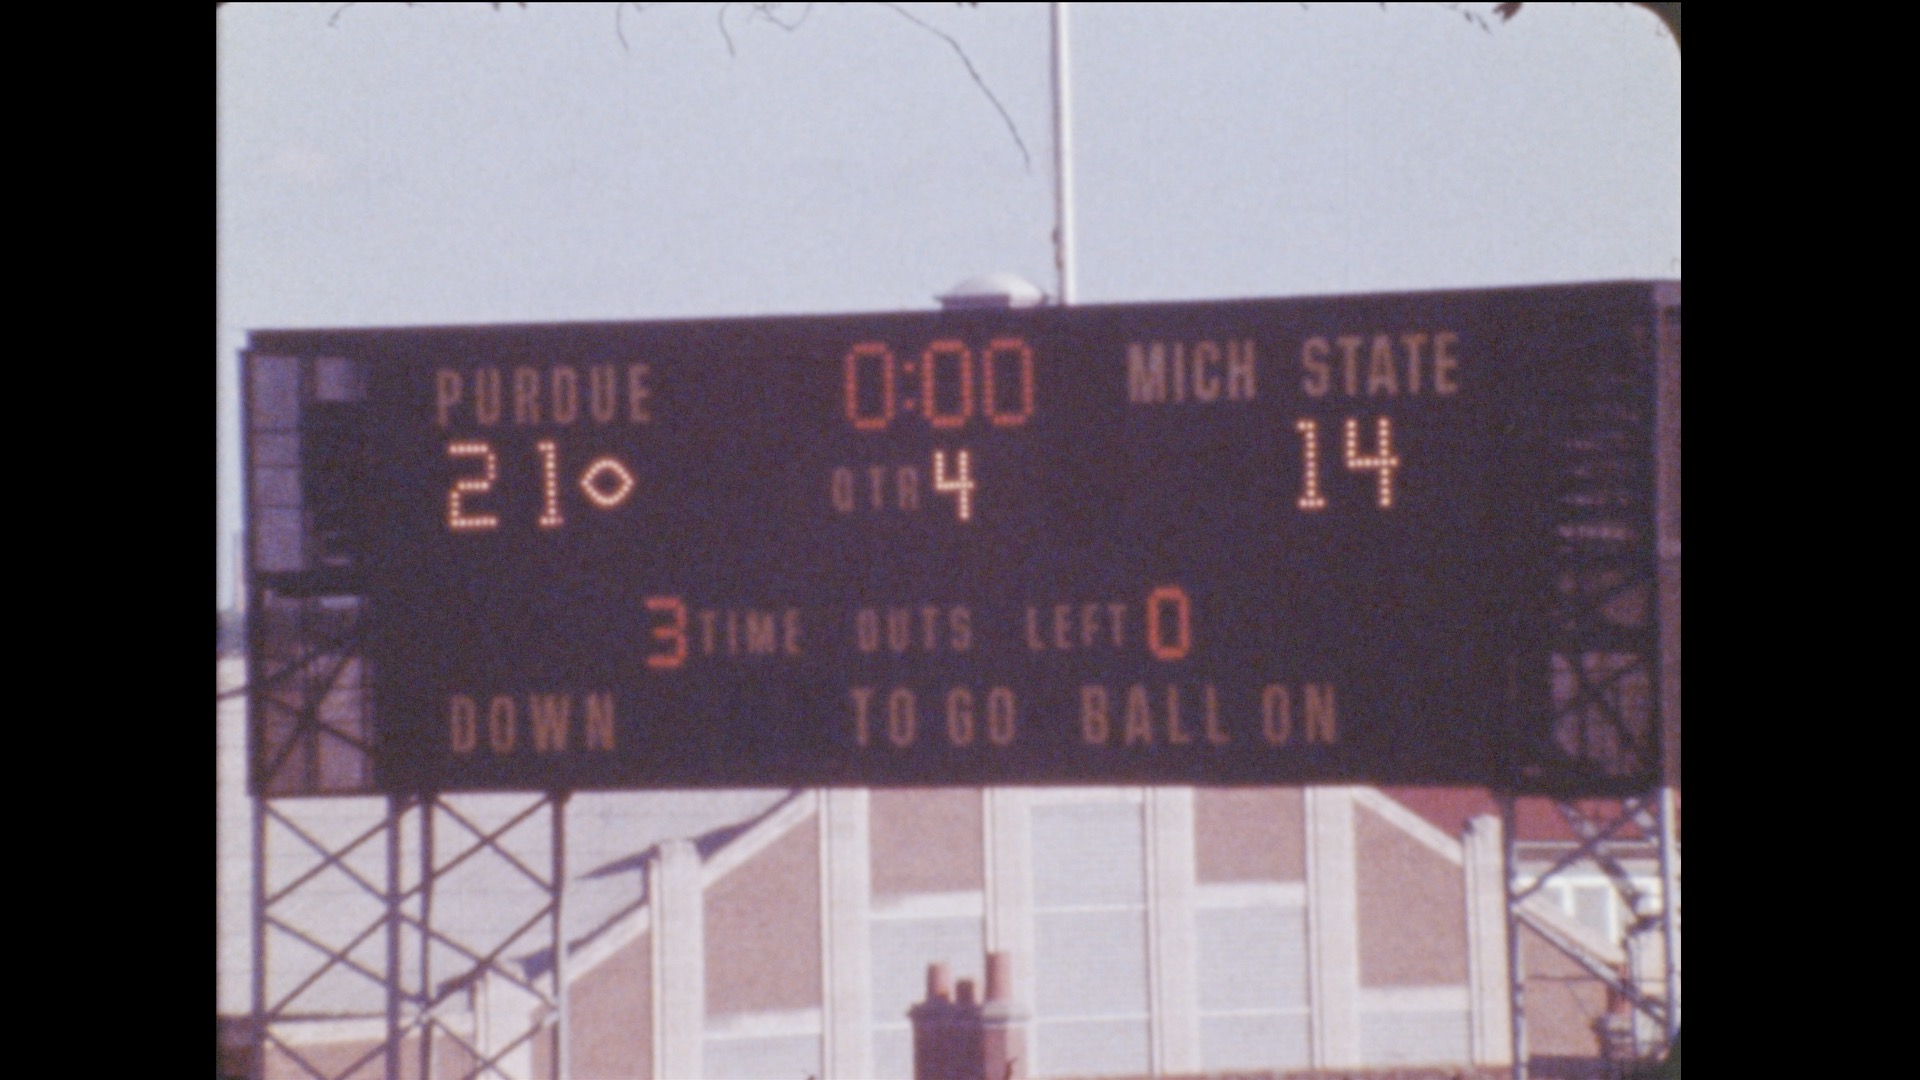 MSU Football vs. Purdue, 1978